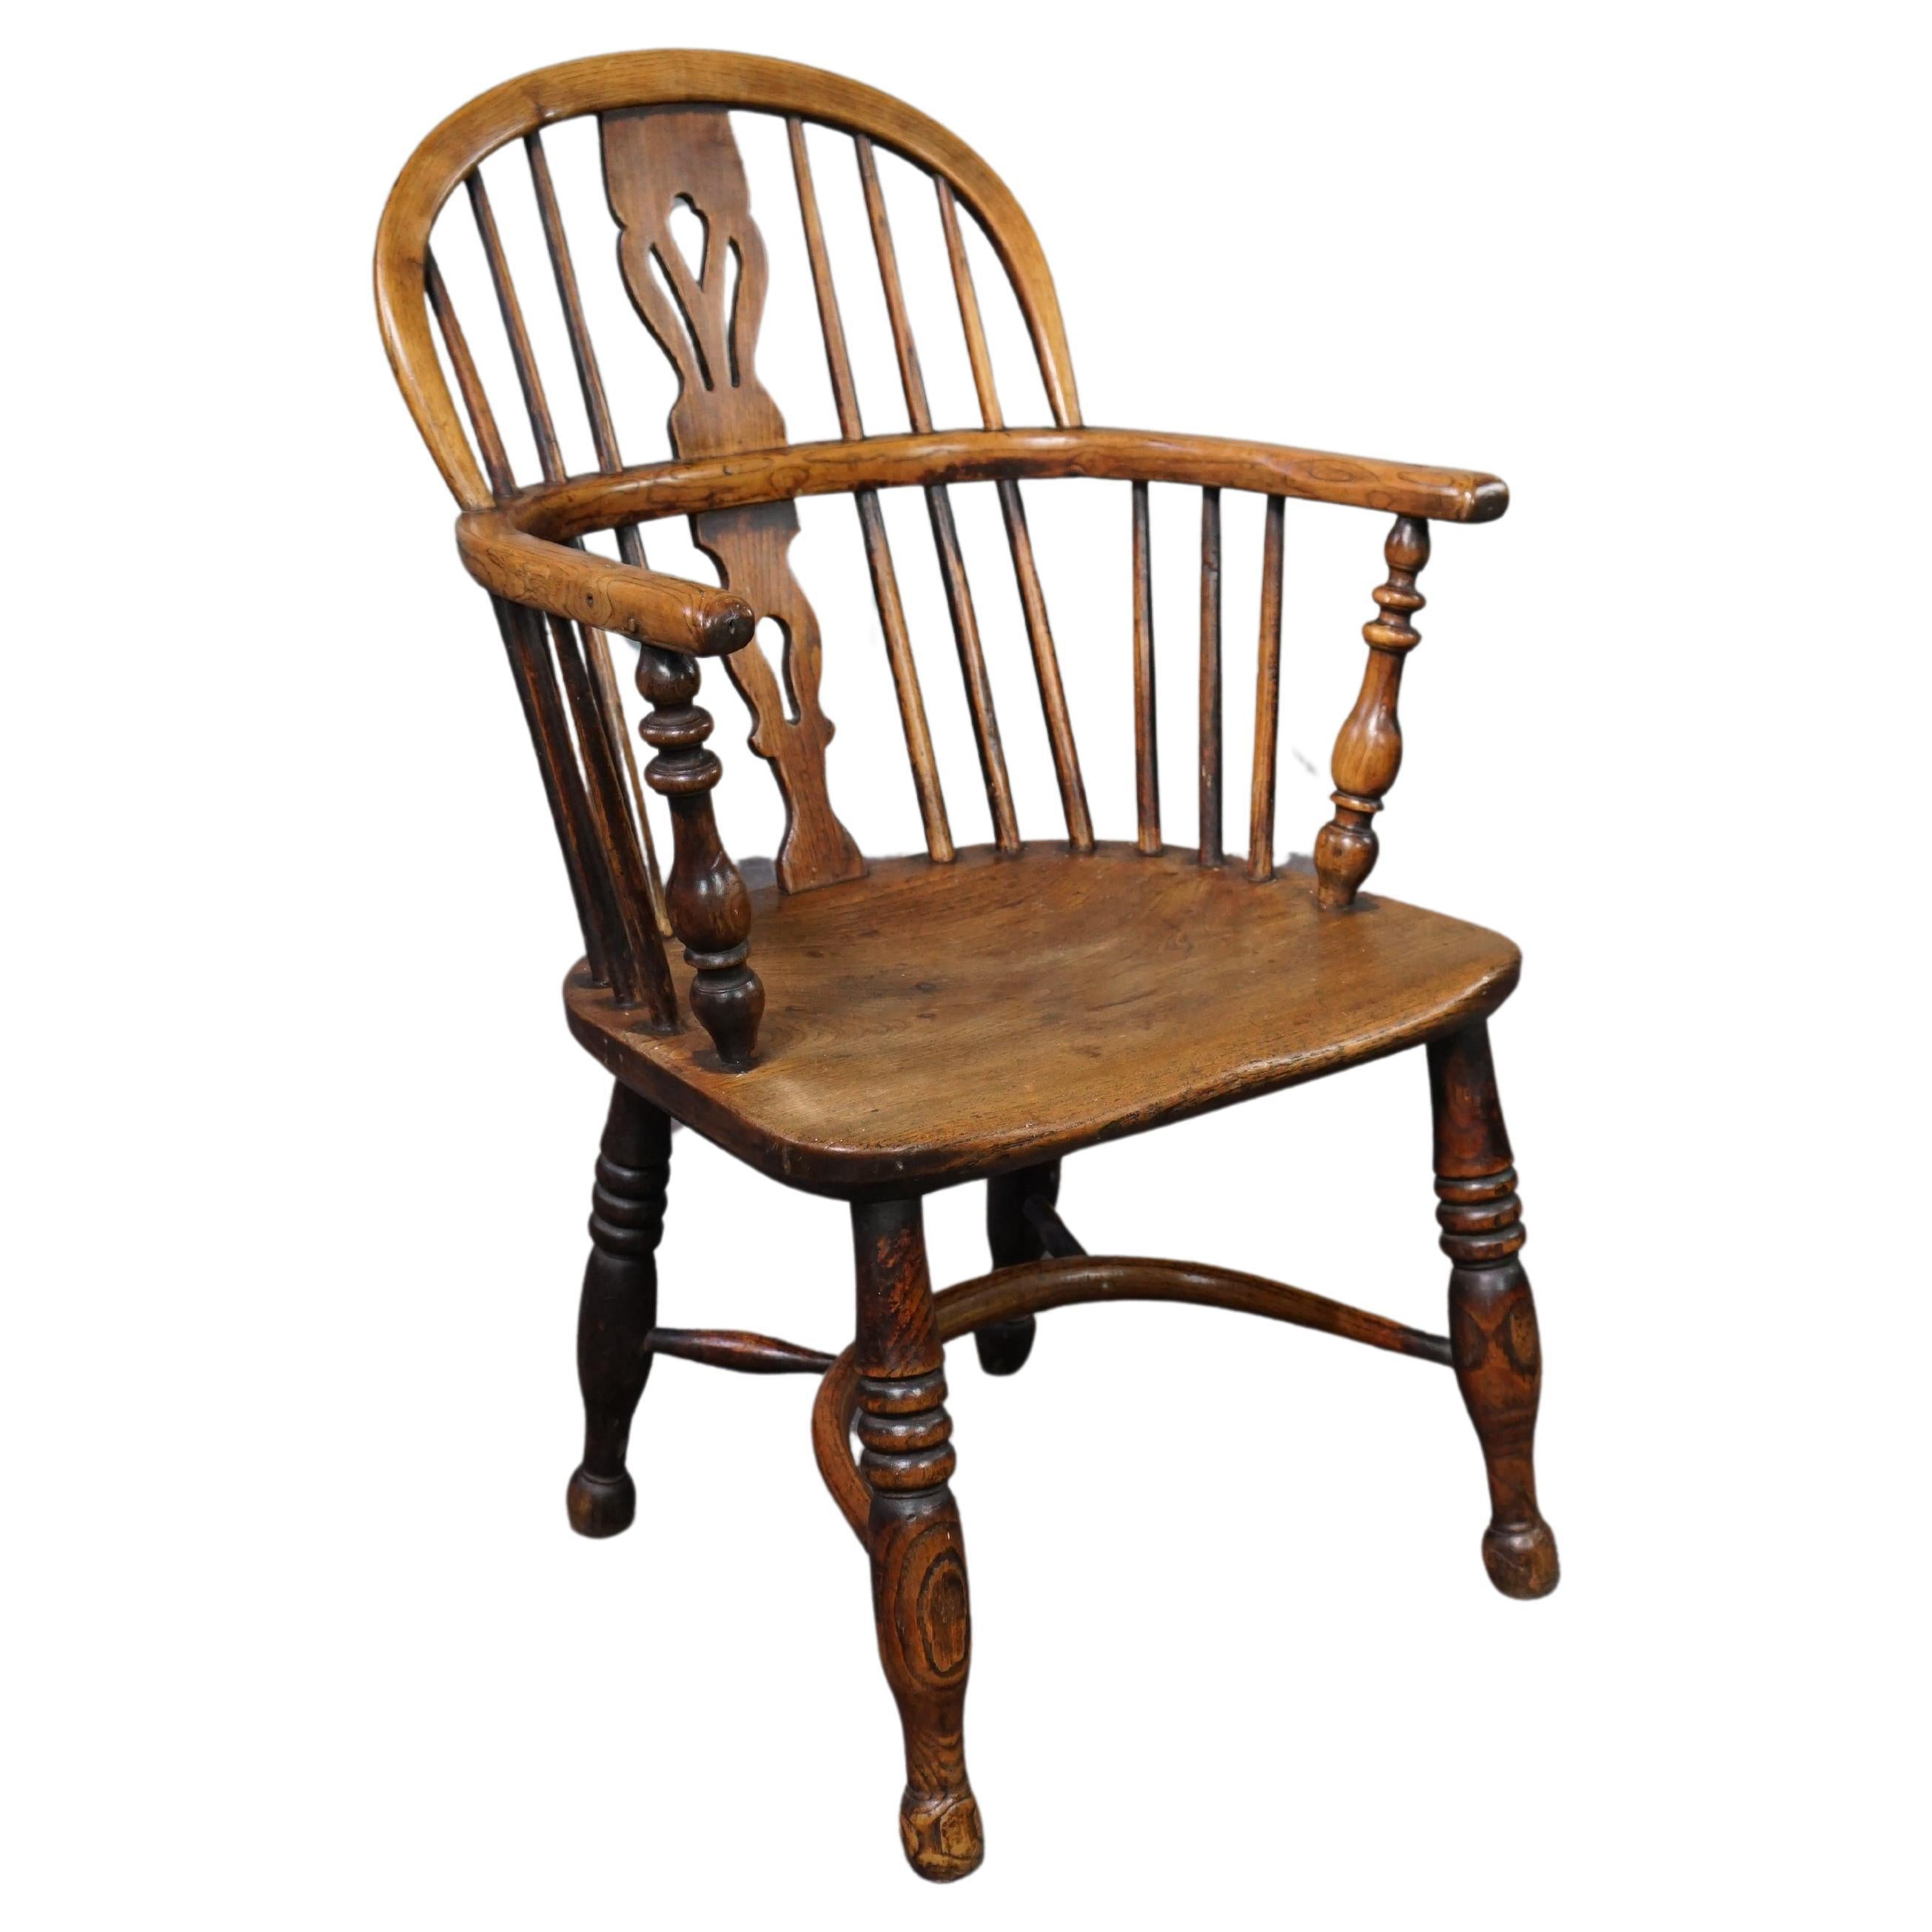 Ancienne chaise/chaise Windsor anglaise, dossier bas, 18e siècle